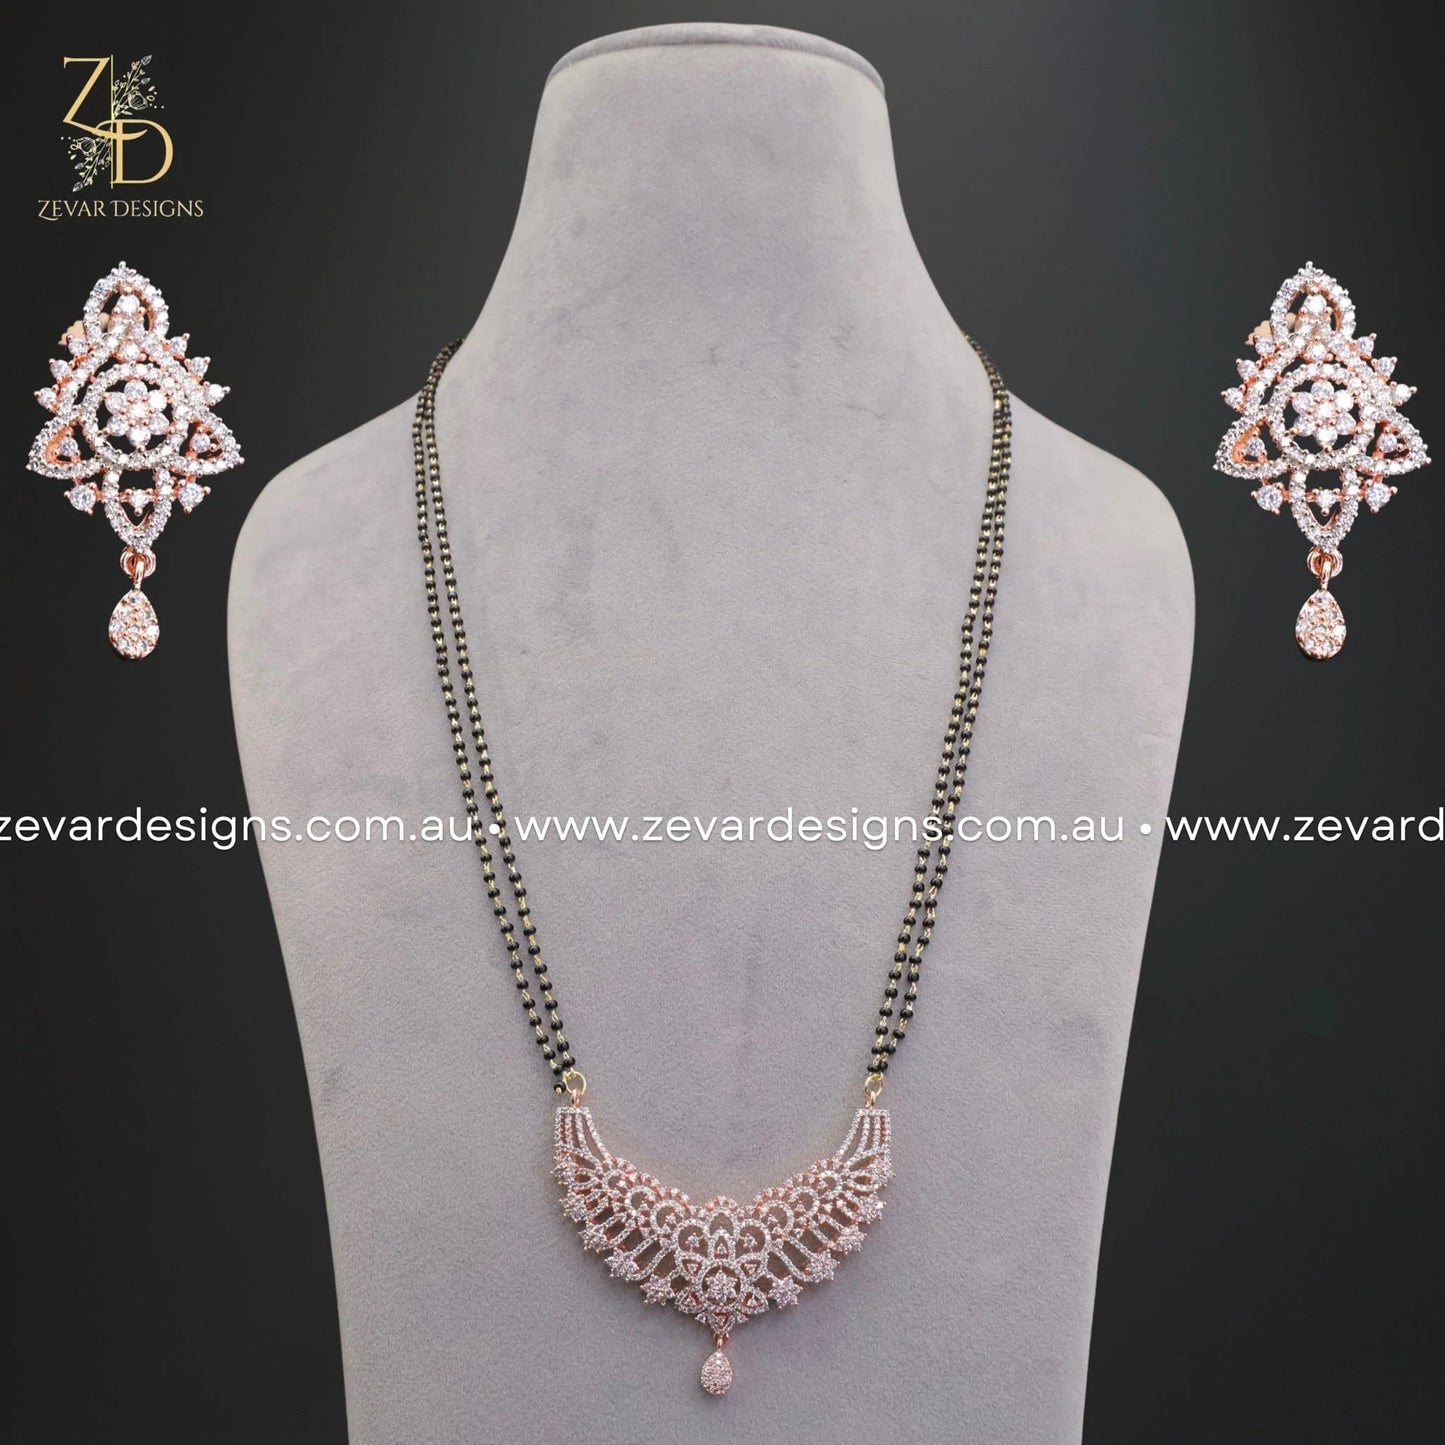 Zevar Designs Mangalsutra AD/Zircon Mangalsutra and Earrings Set - Rose Gold